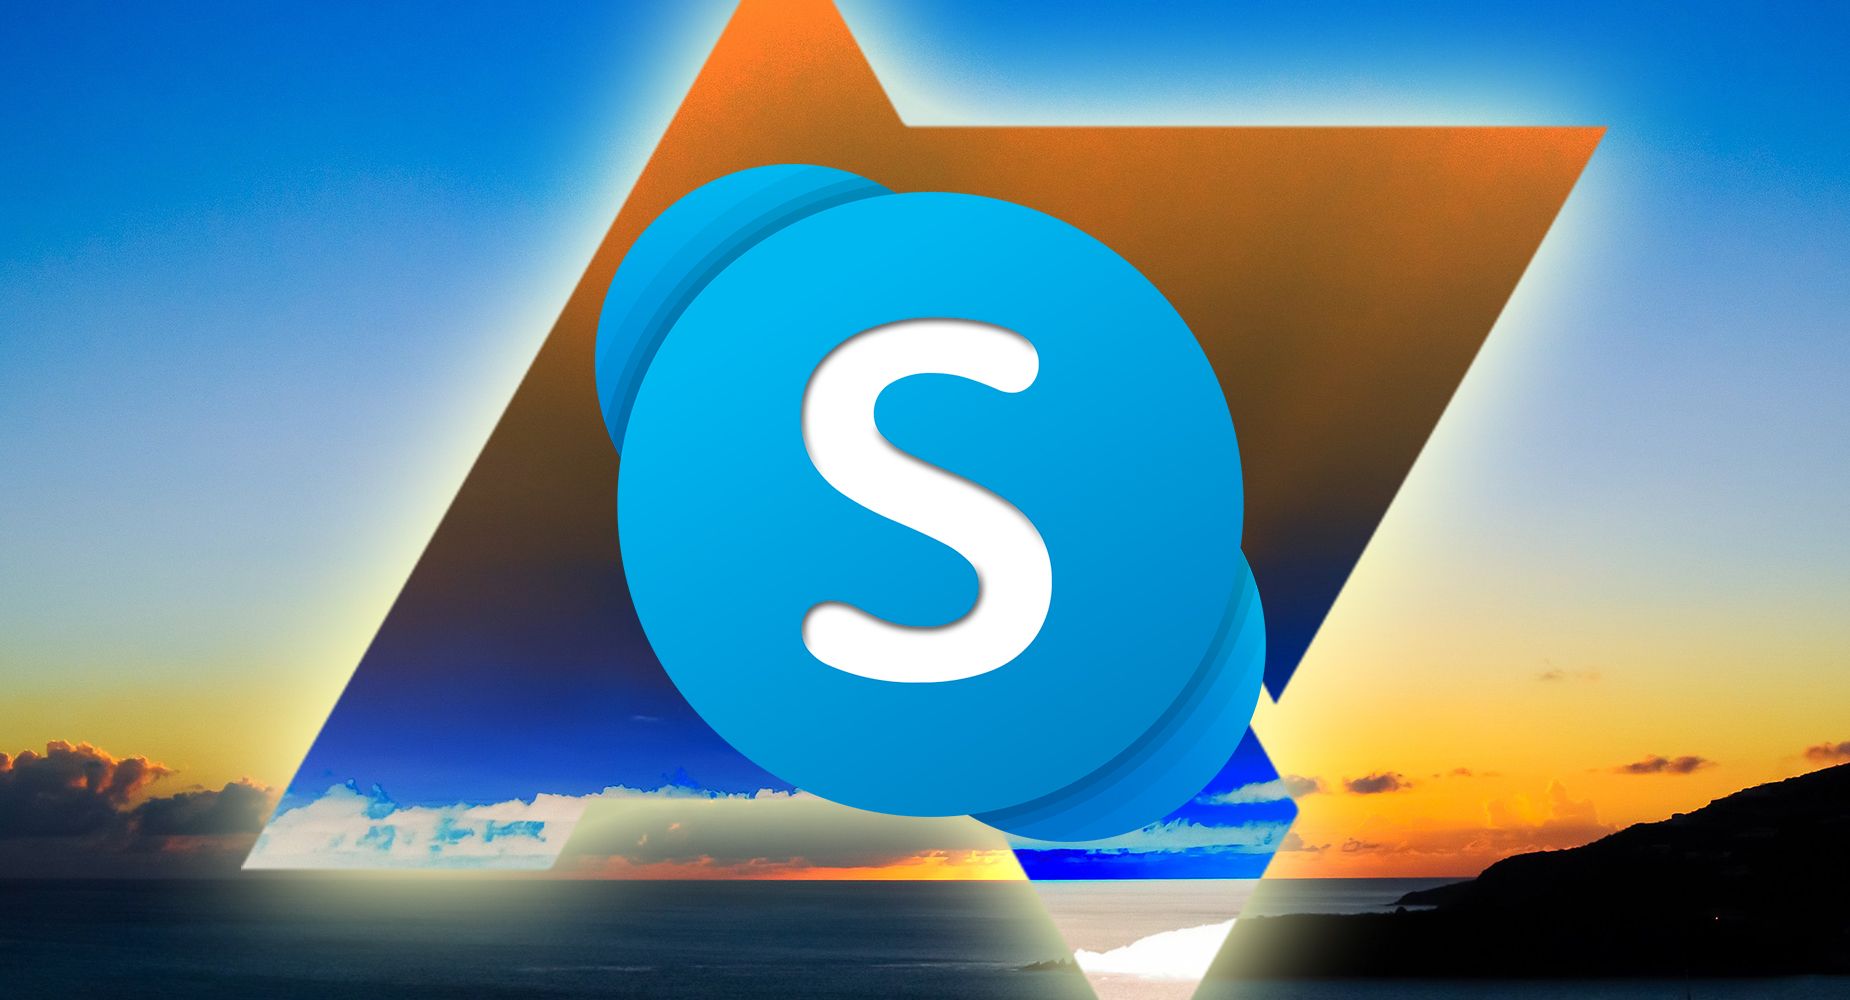 Skype logo over AP logo over a sunset